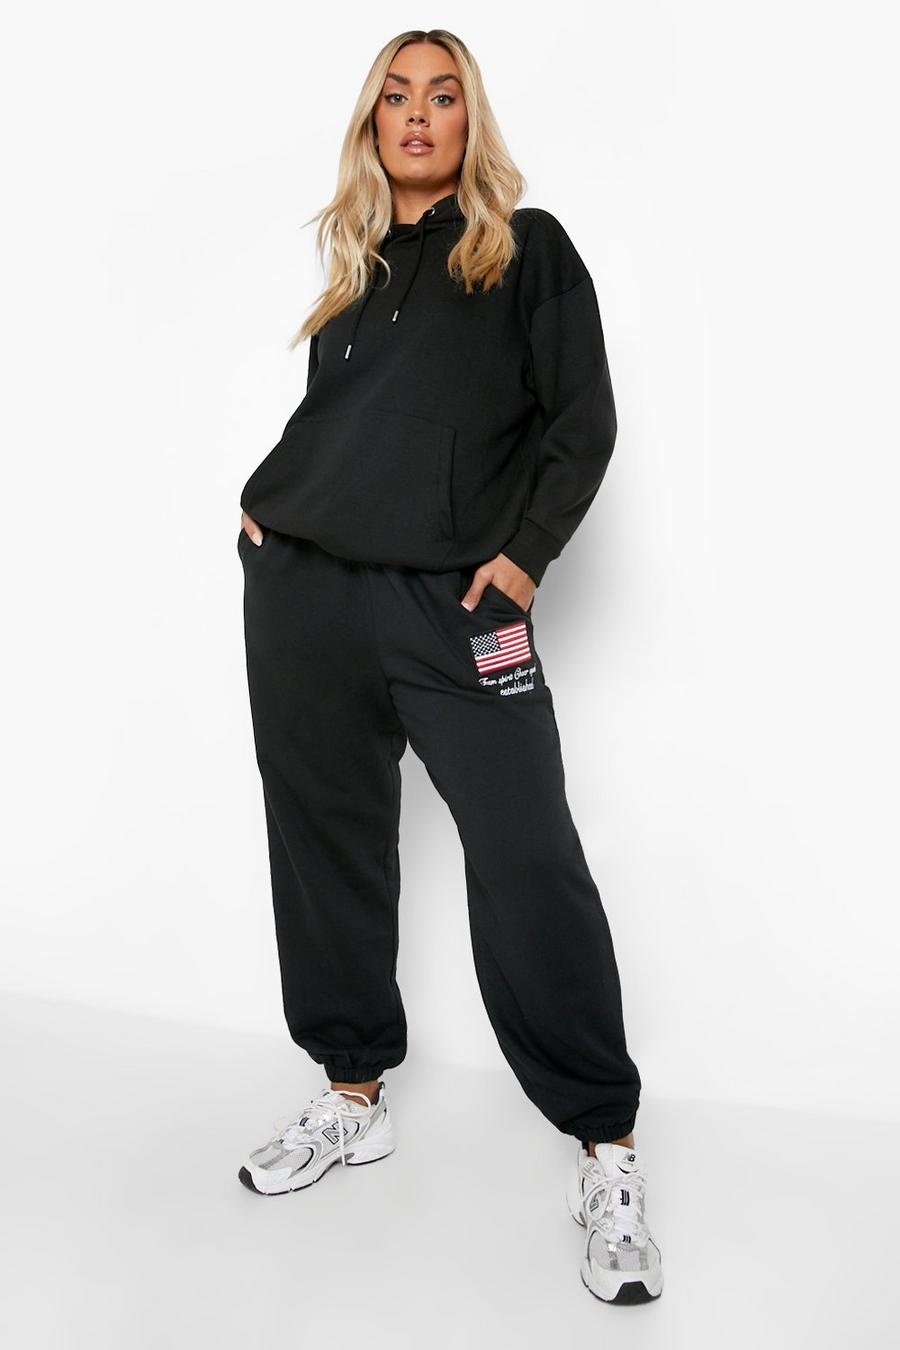 Pantalón deportivo Plus oversize Official con bordado, Black negro image number 1